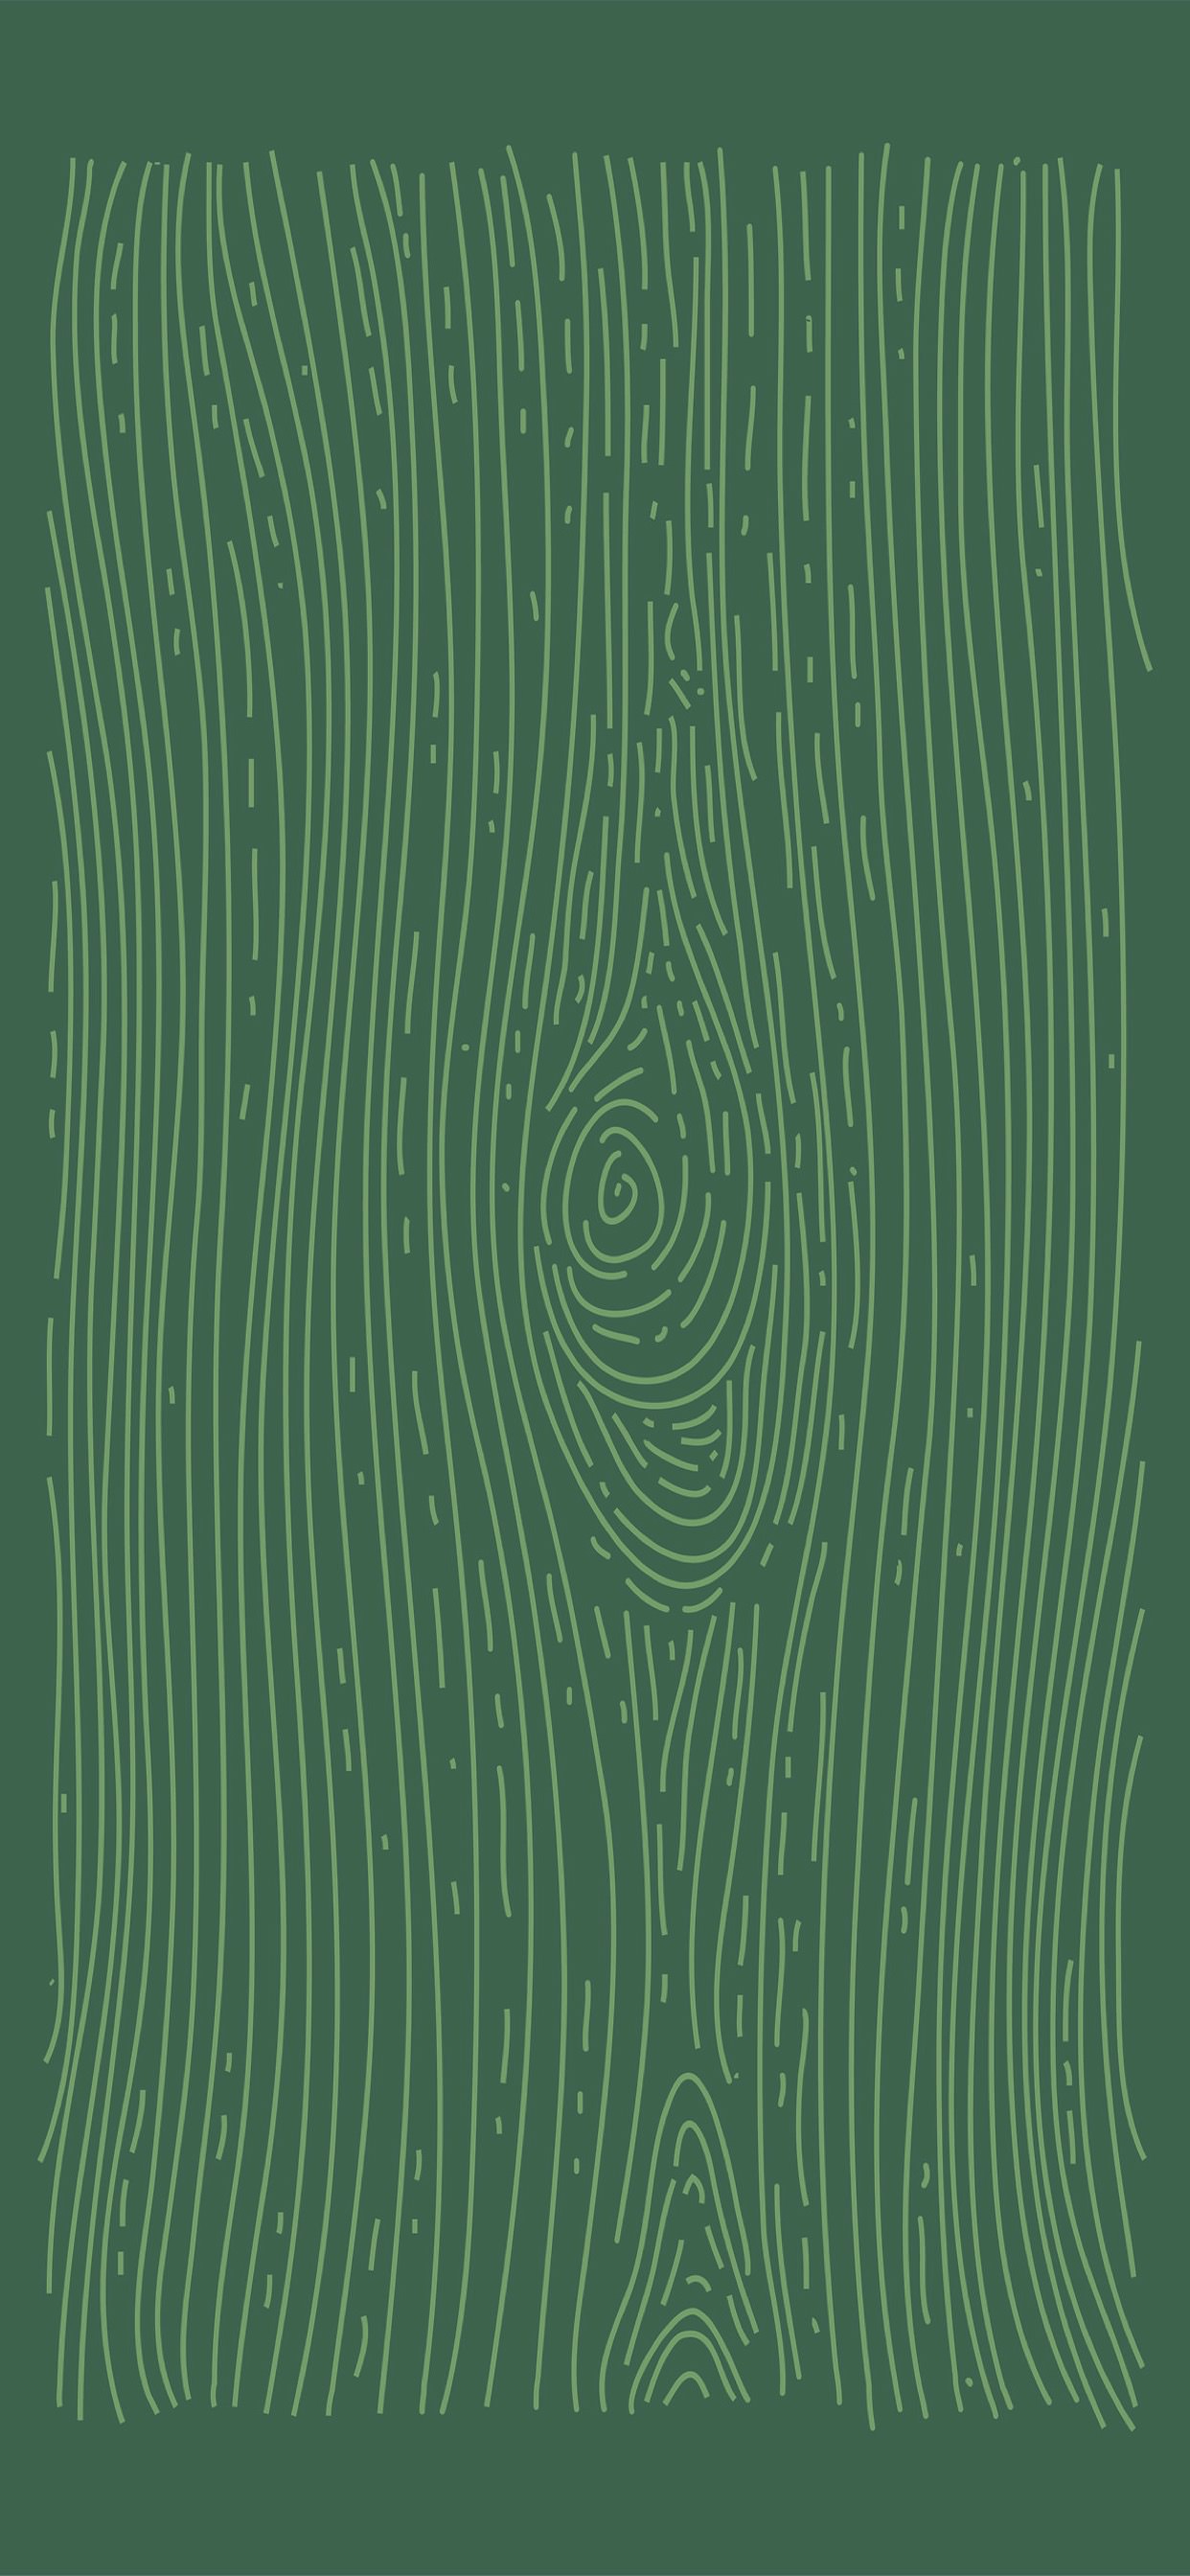 Illustrations grain green | wallpaper.sc iPhone XS Max